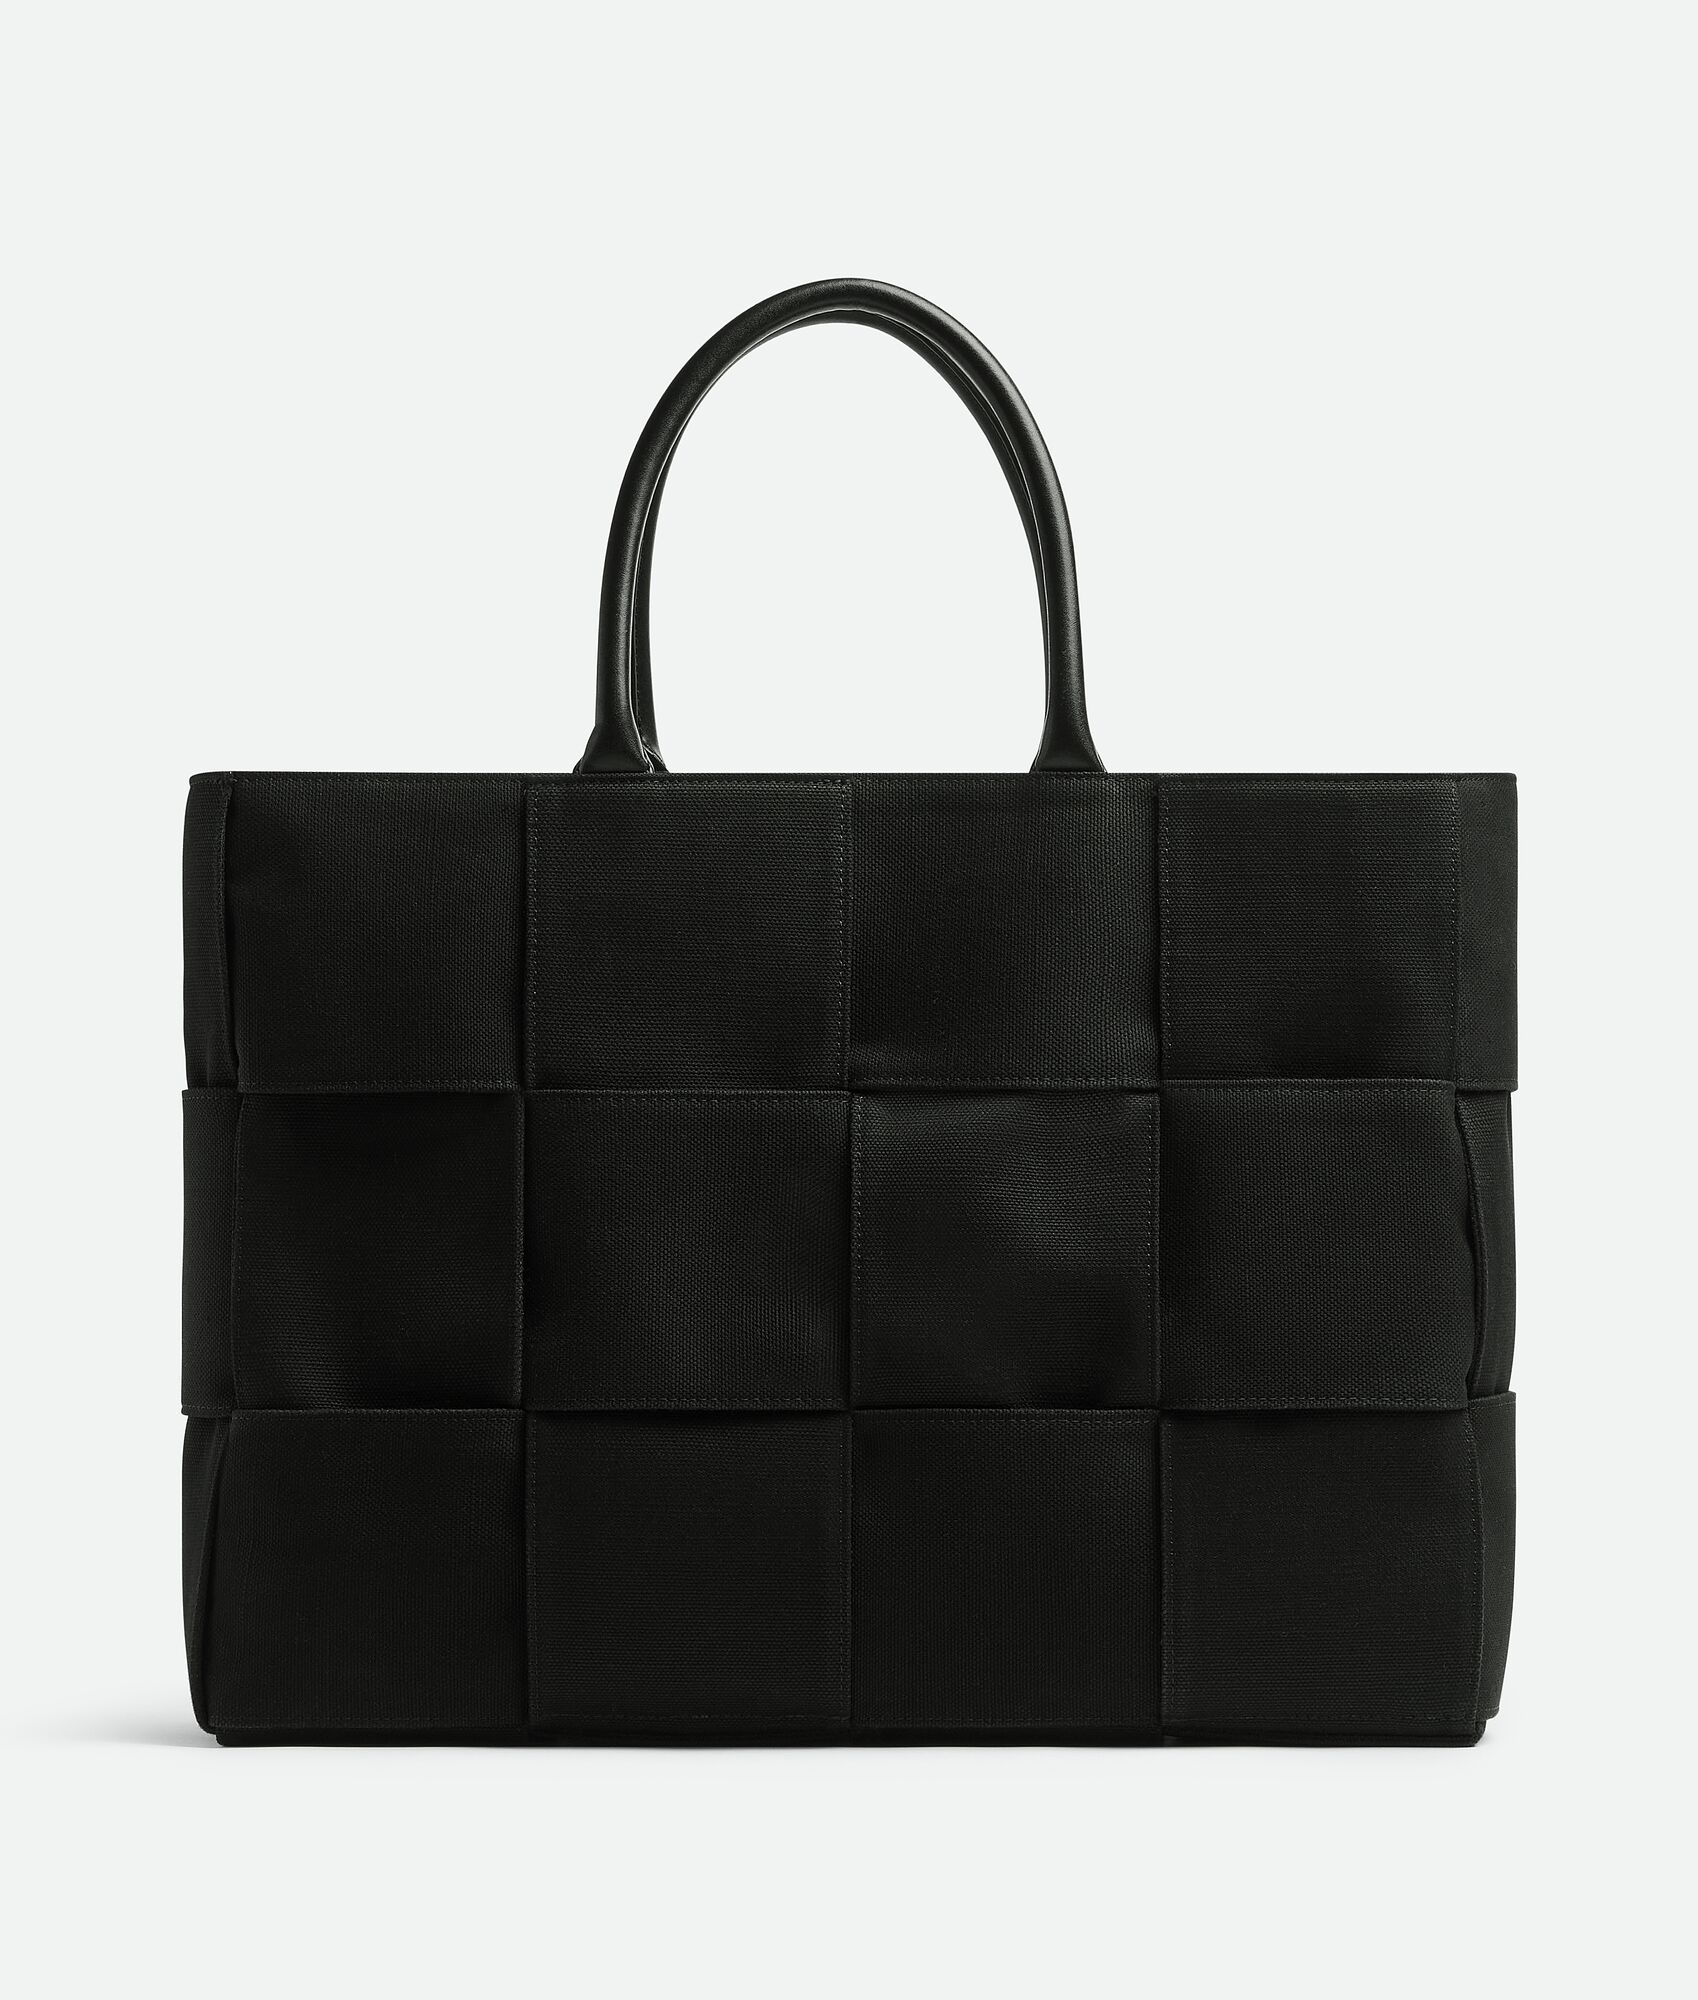 Bottega Veneta® Large Arco Tote Bag in Black. Shop online now.